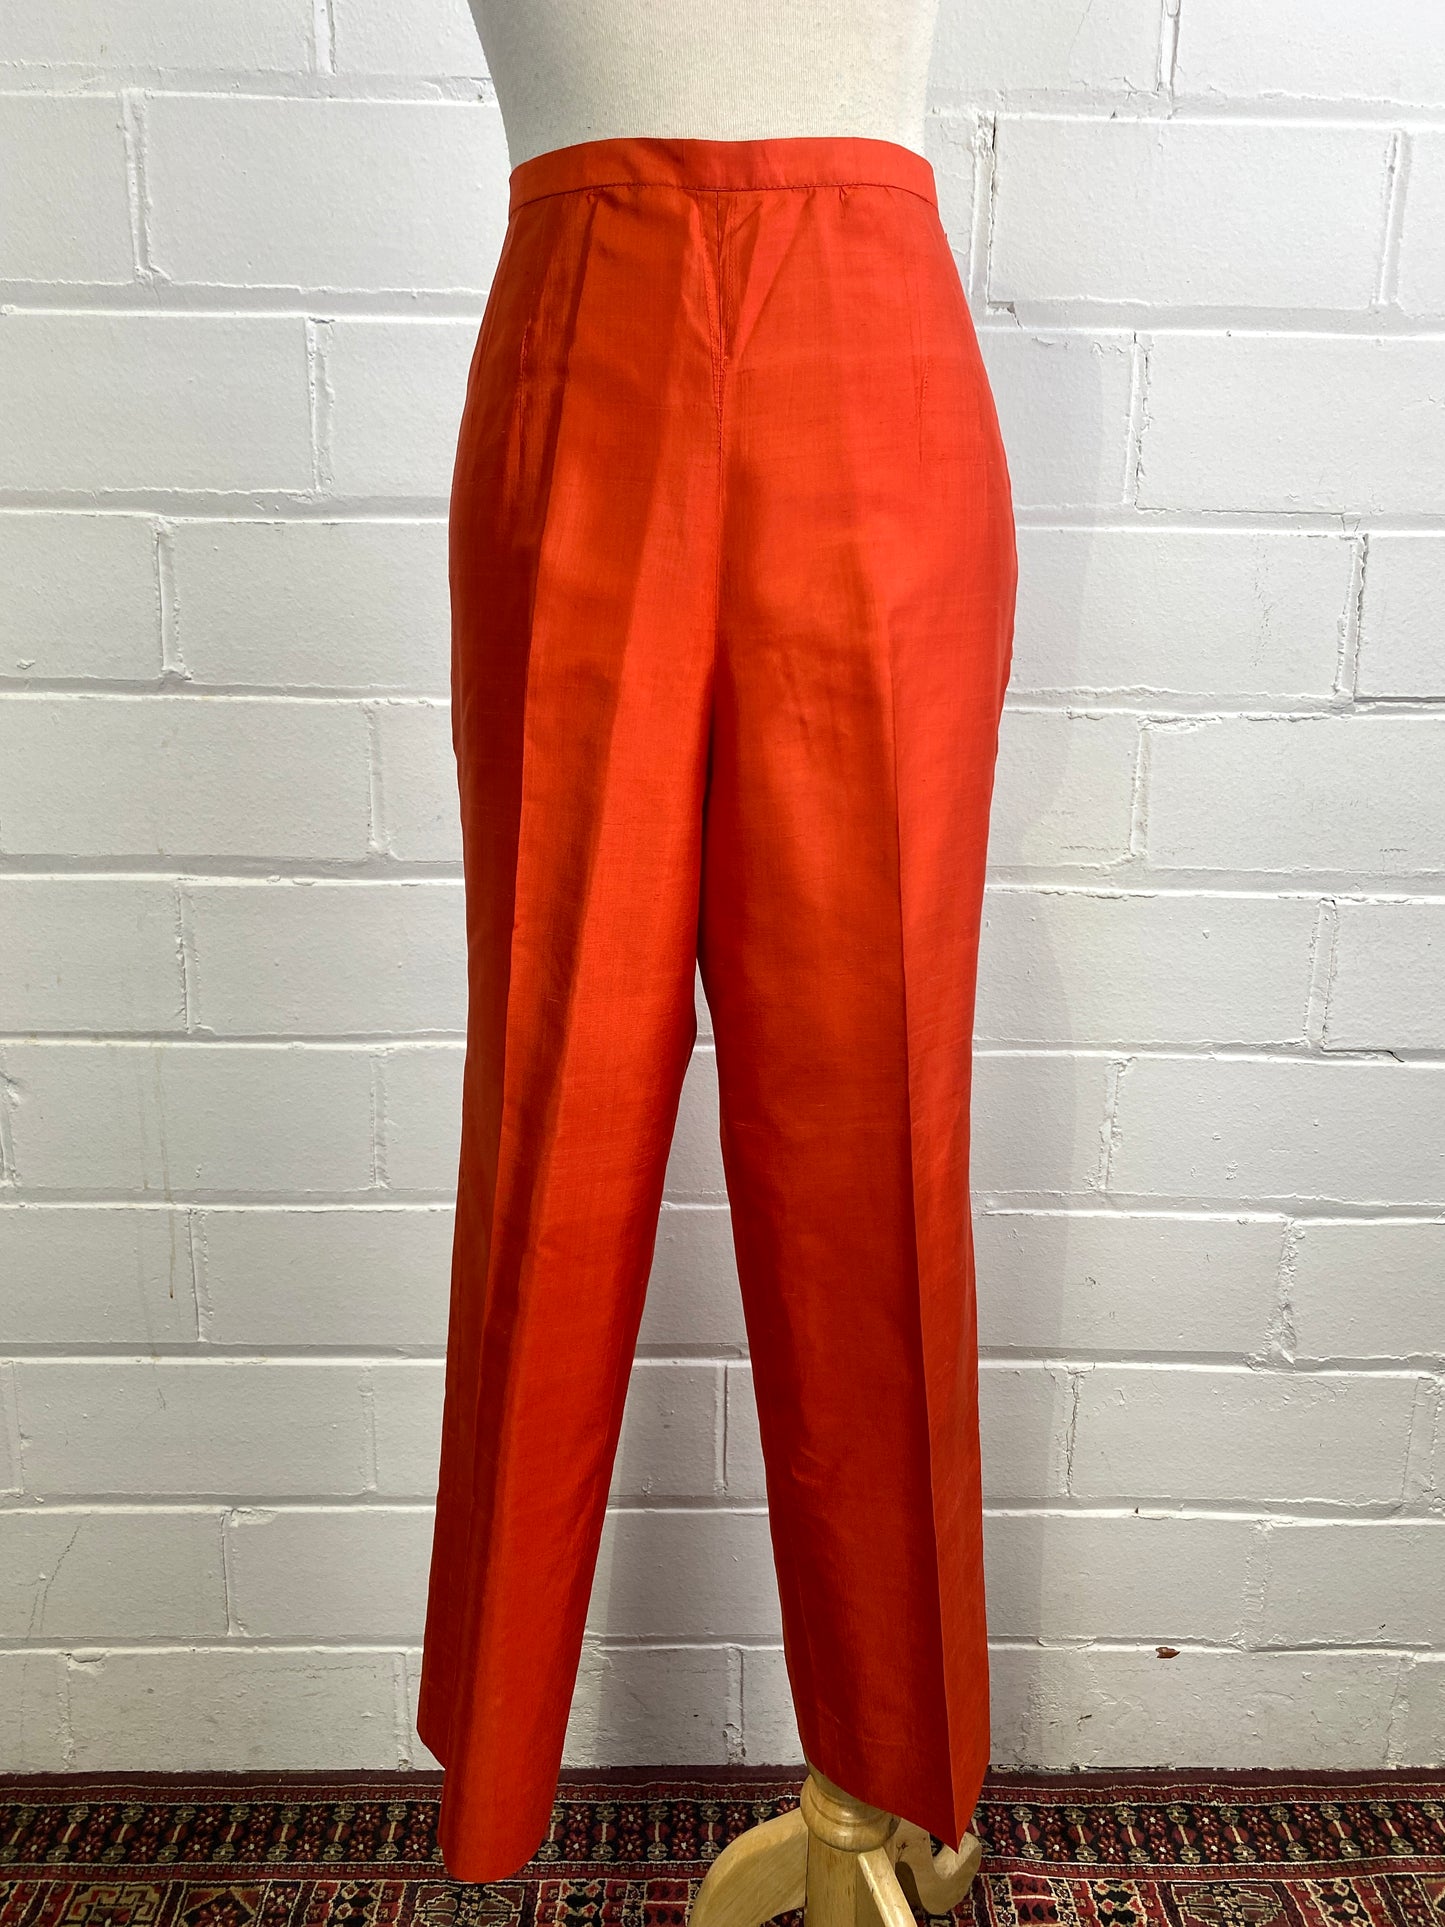 Vintage 1970s Orange Raw Silk Tunic & Pant Set with Sash Belt, B48"